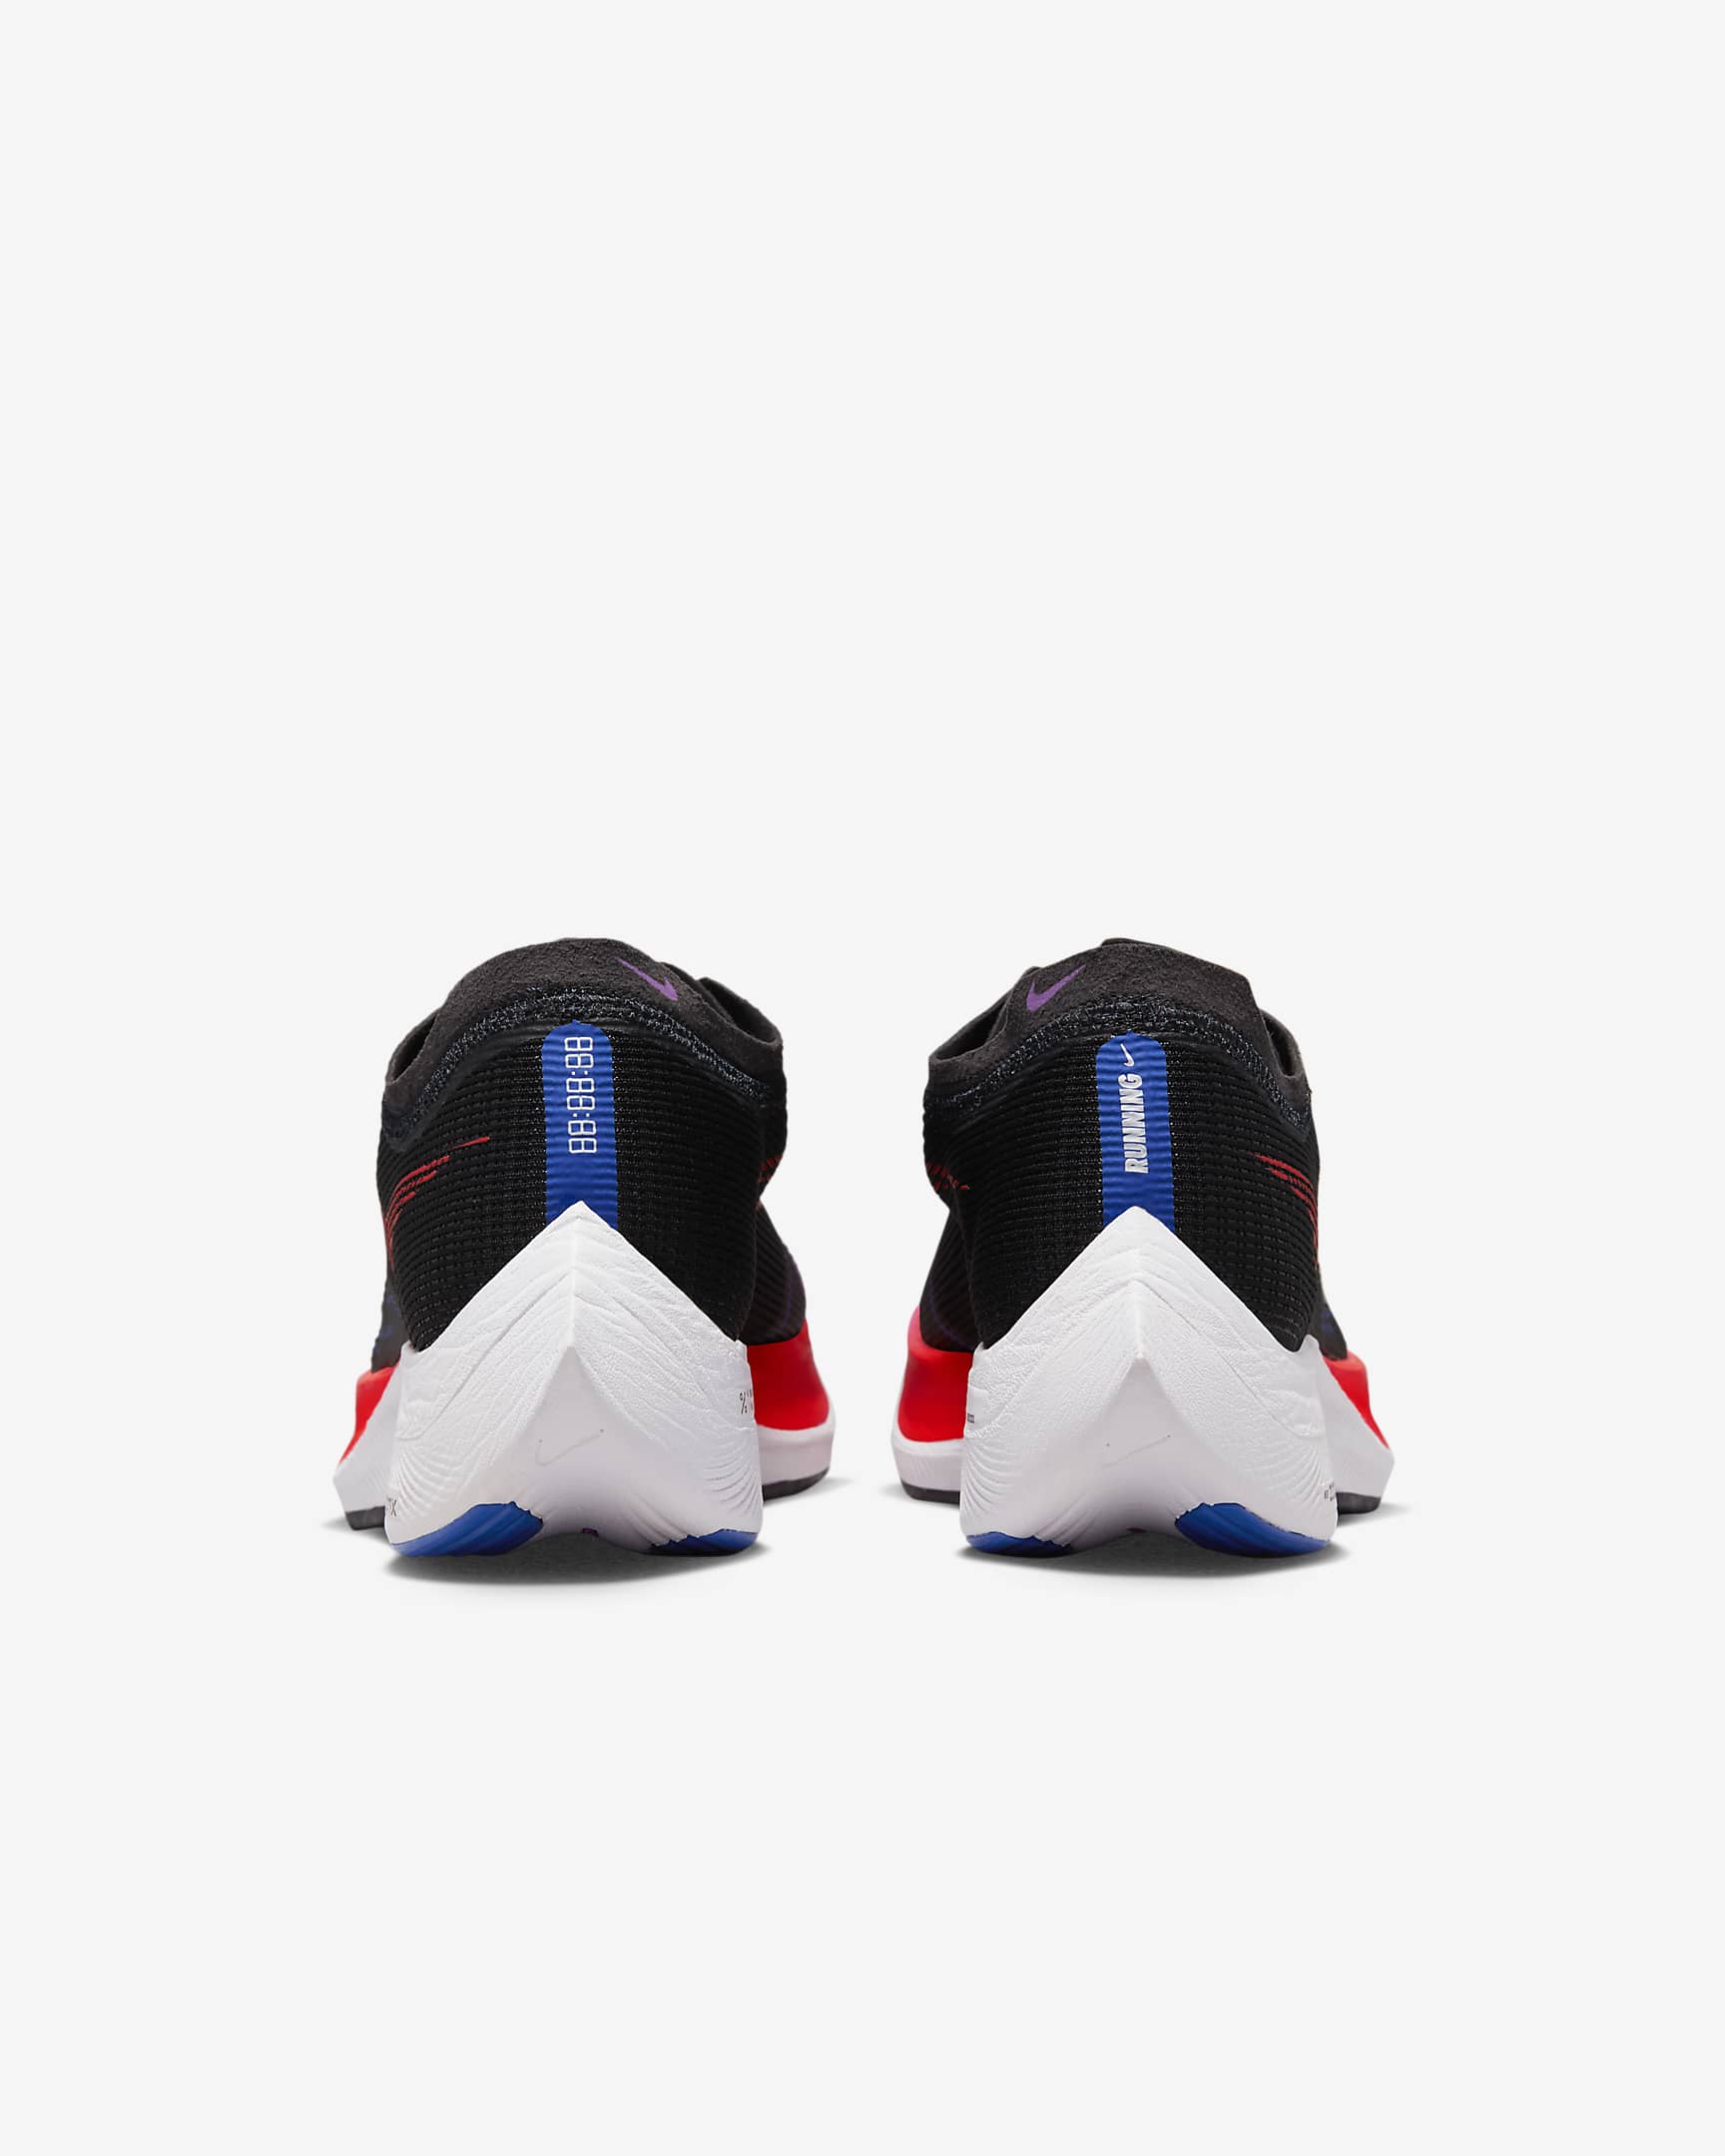 Nike Vaporfly 2 Women's Road Racing Shoes - Black/Fuchsia Dream/White/Bright Crimson